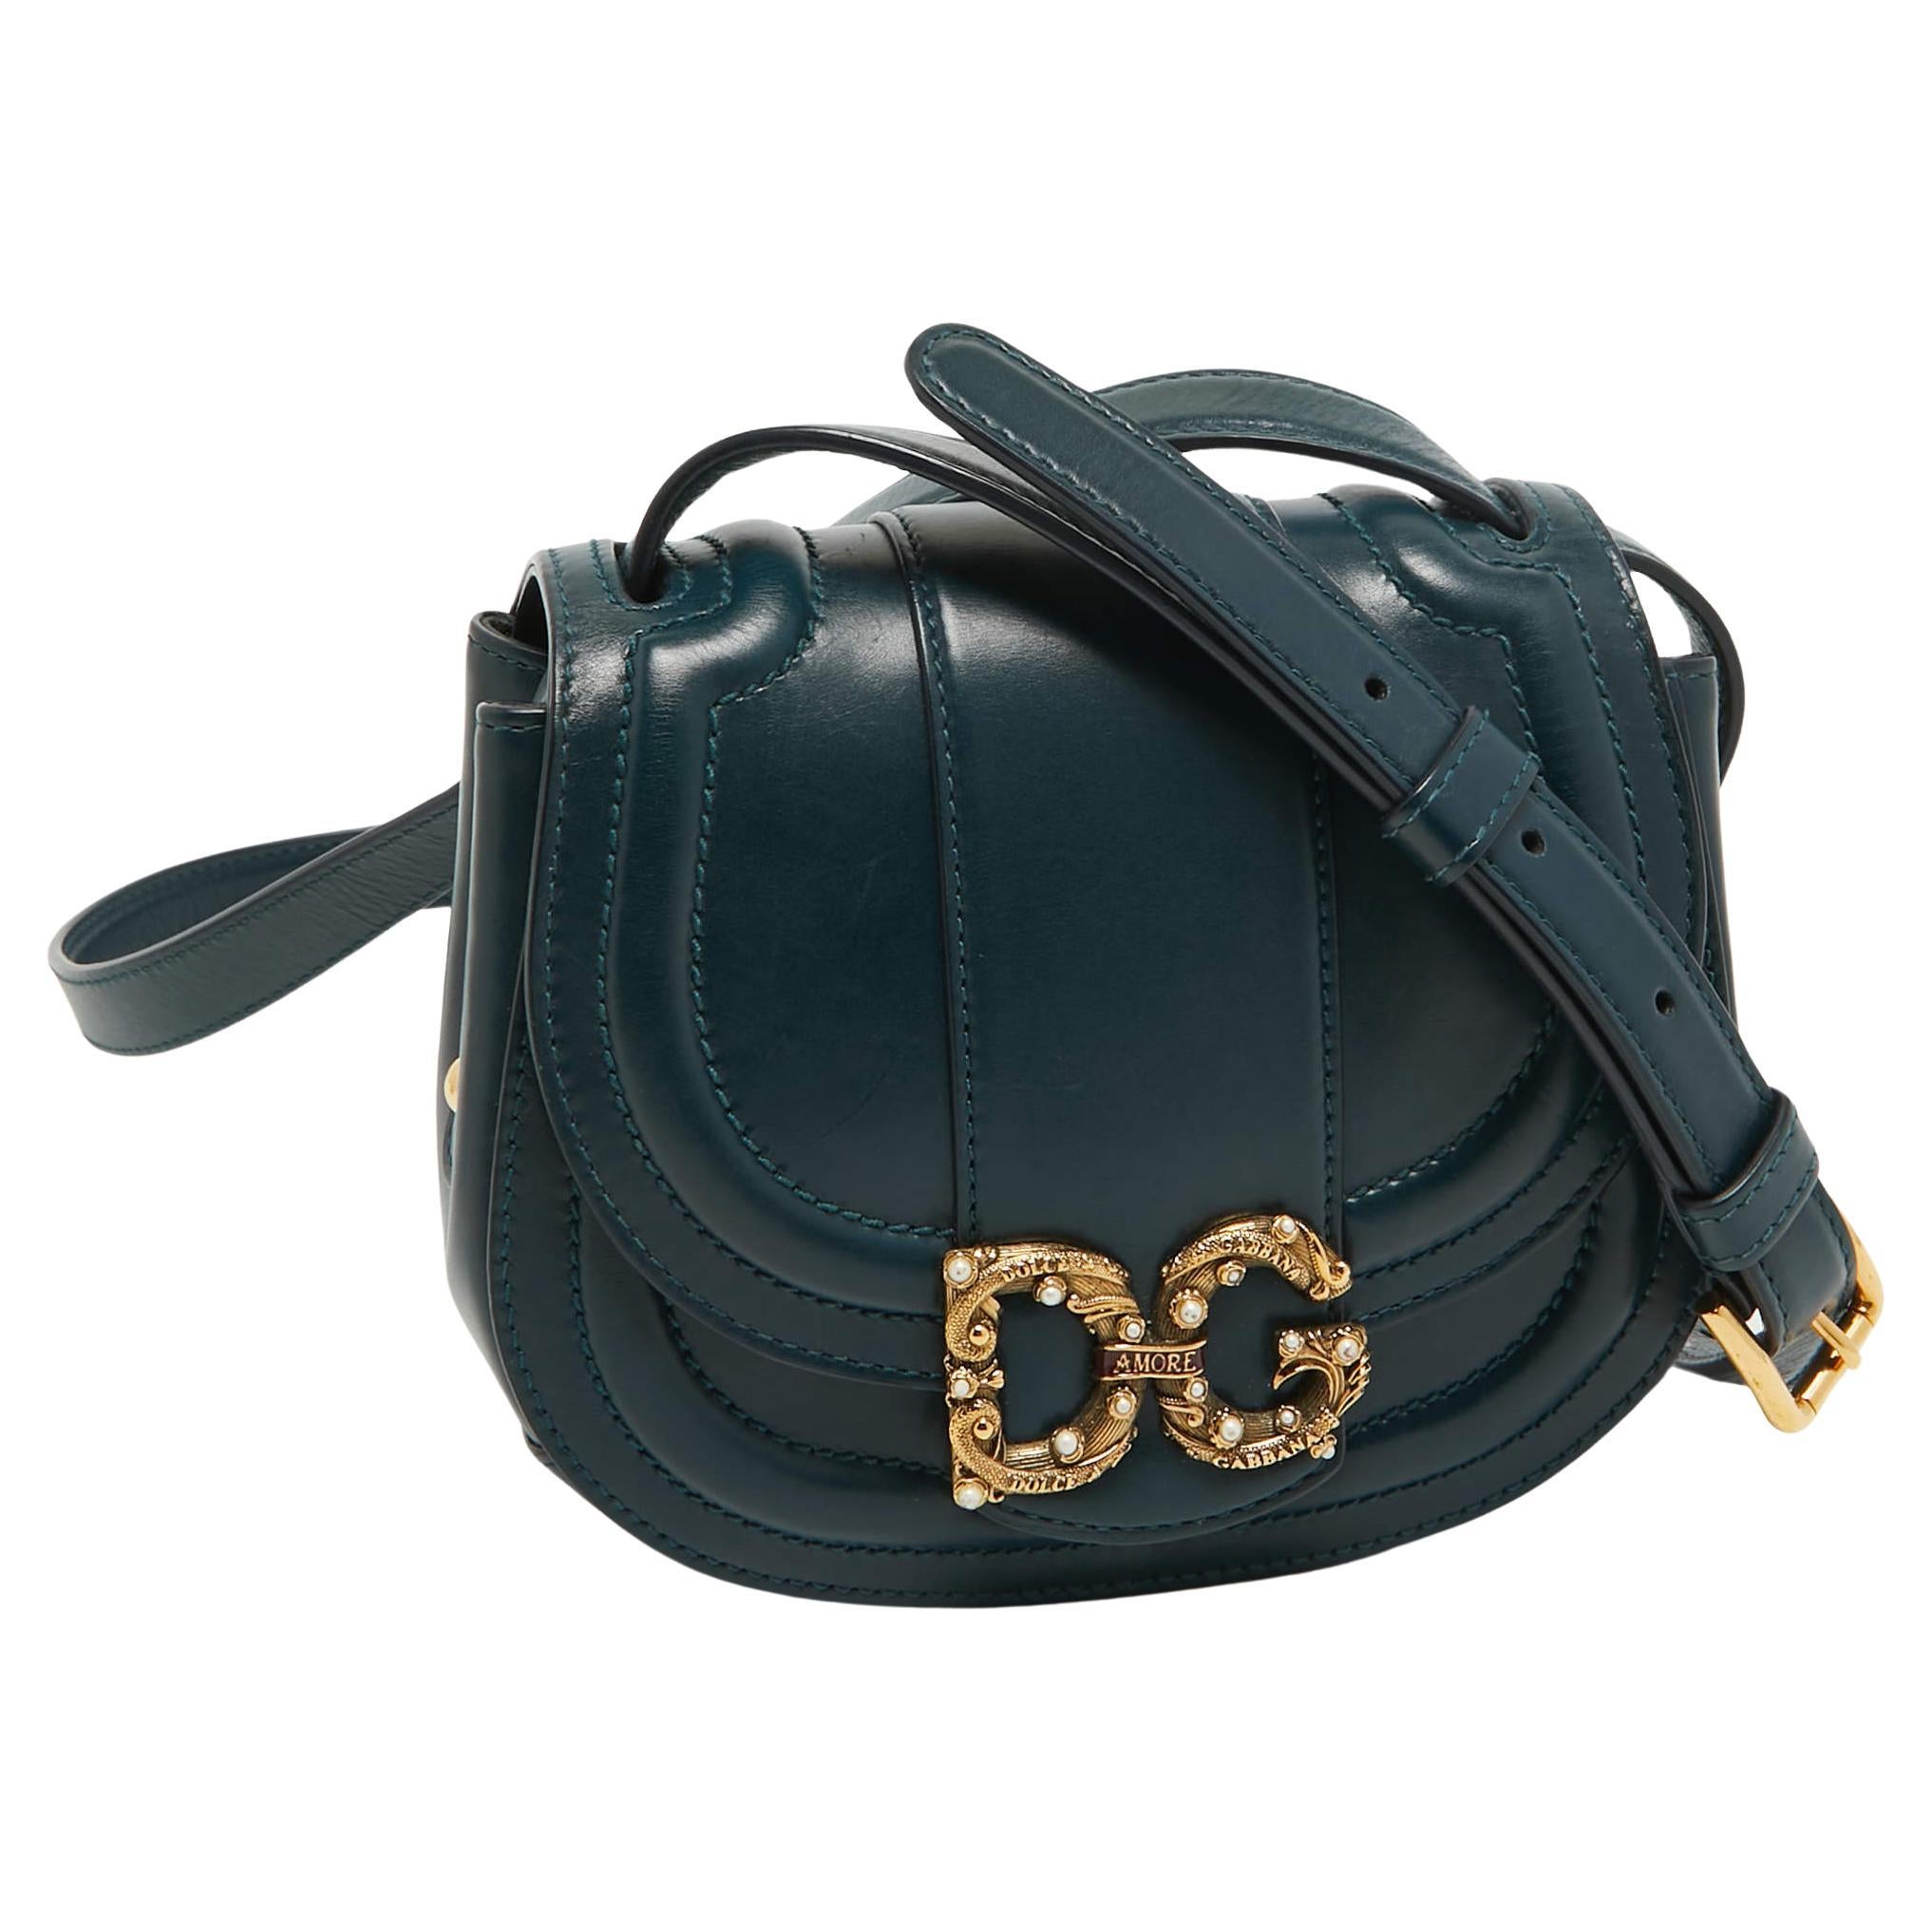 Dolce & Gabbana Teal Leather Amore Crossbody Bag